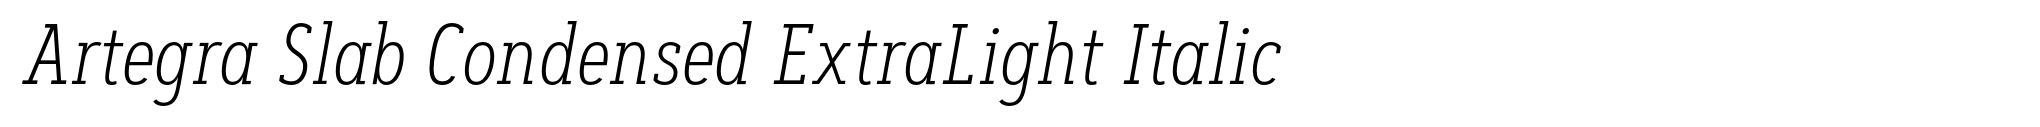 Artegra Slab Condensed ExtraLight Italic image